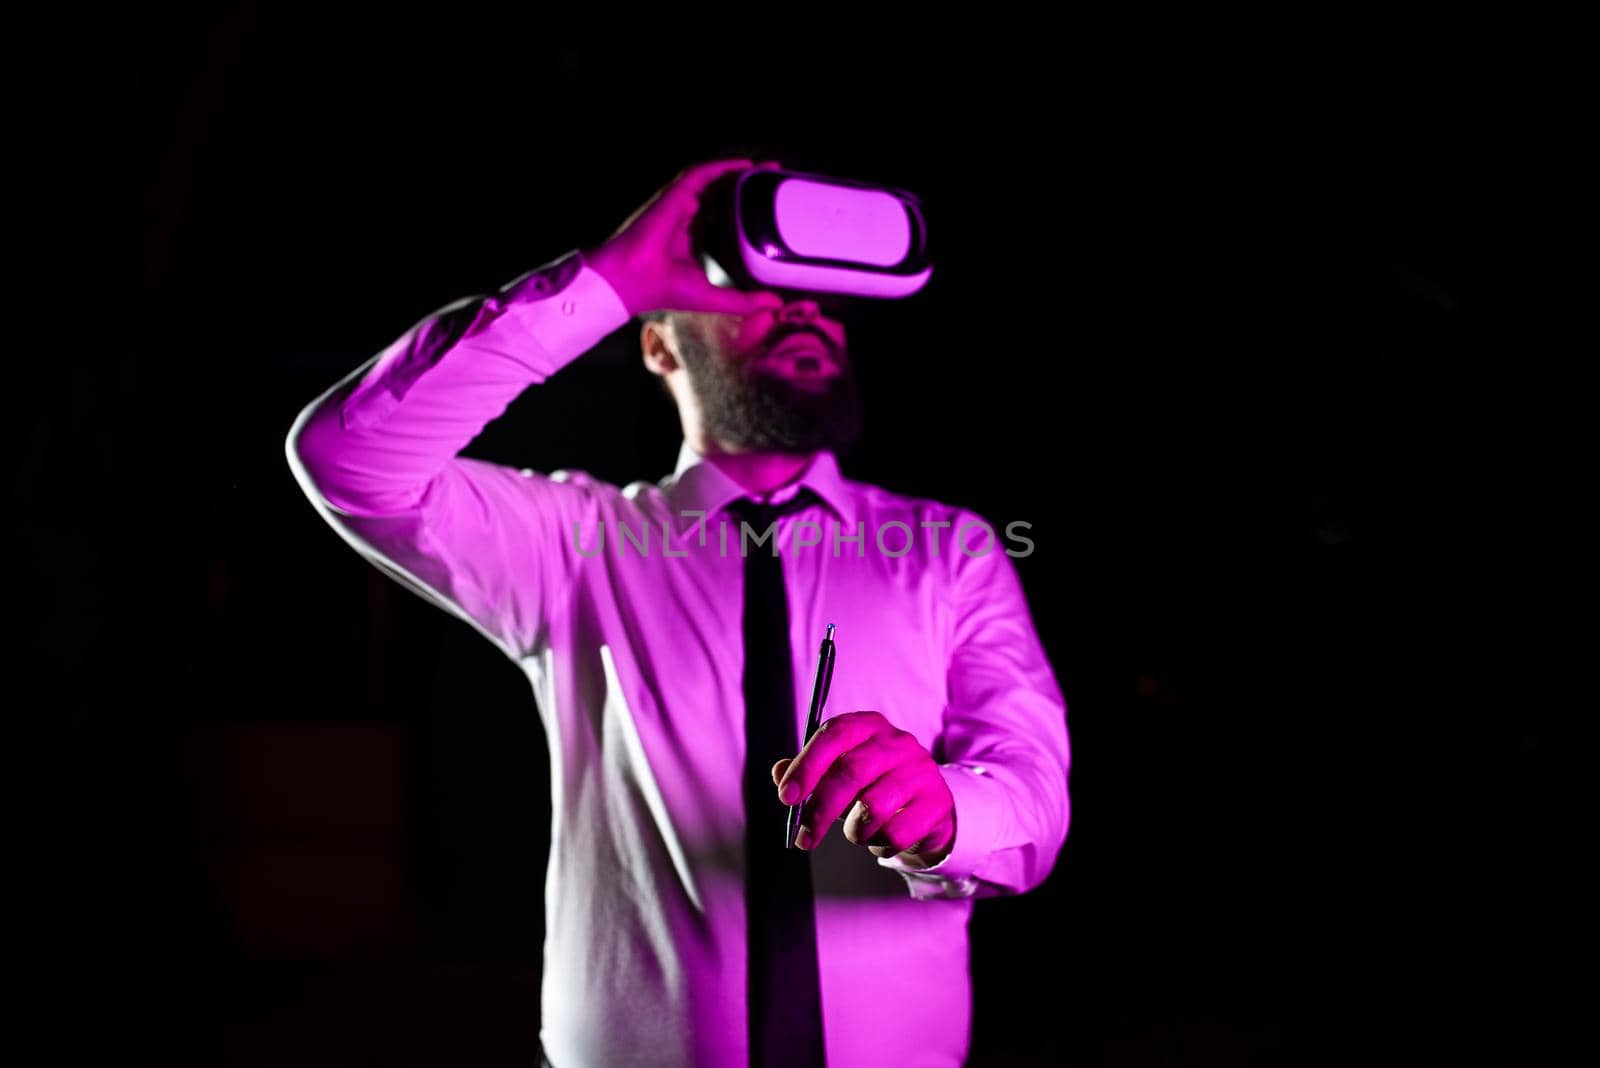 Businessman Wearing Headset Holding Pen While Taking Professional Training Through Wearing Virtual Reality Simulator. Light Falling On Man Presenting Futuristic Technology. by nialowwa